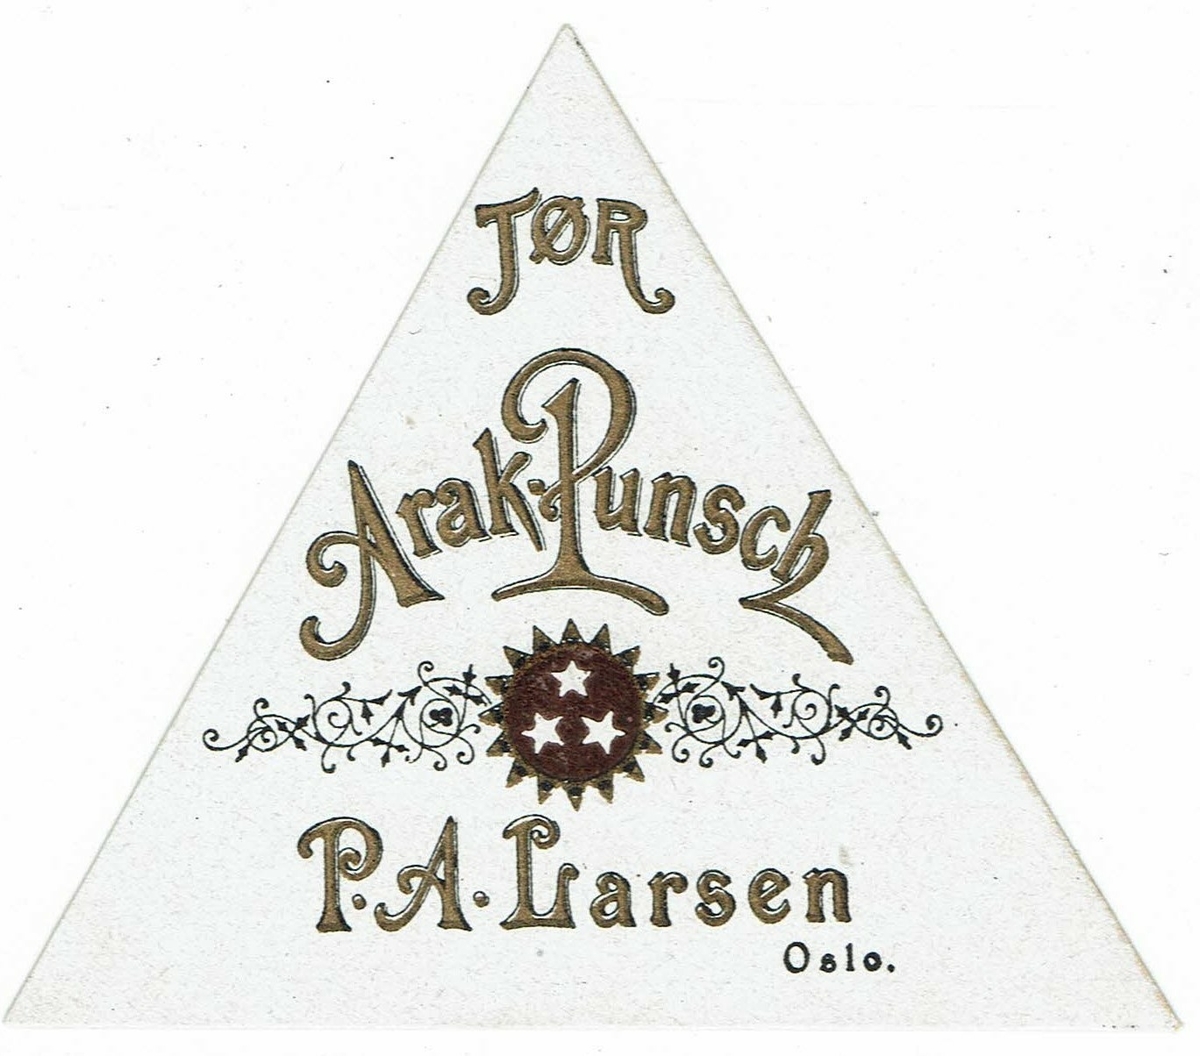 Tør Arak Punsch. P. A. Larsen, Oslo. Tre stjerner. 